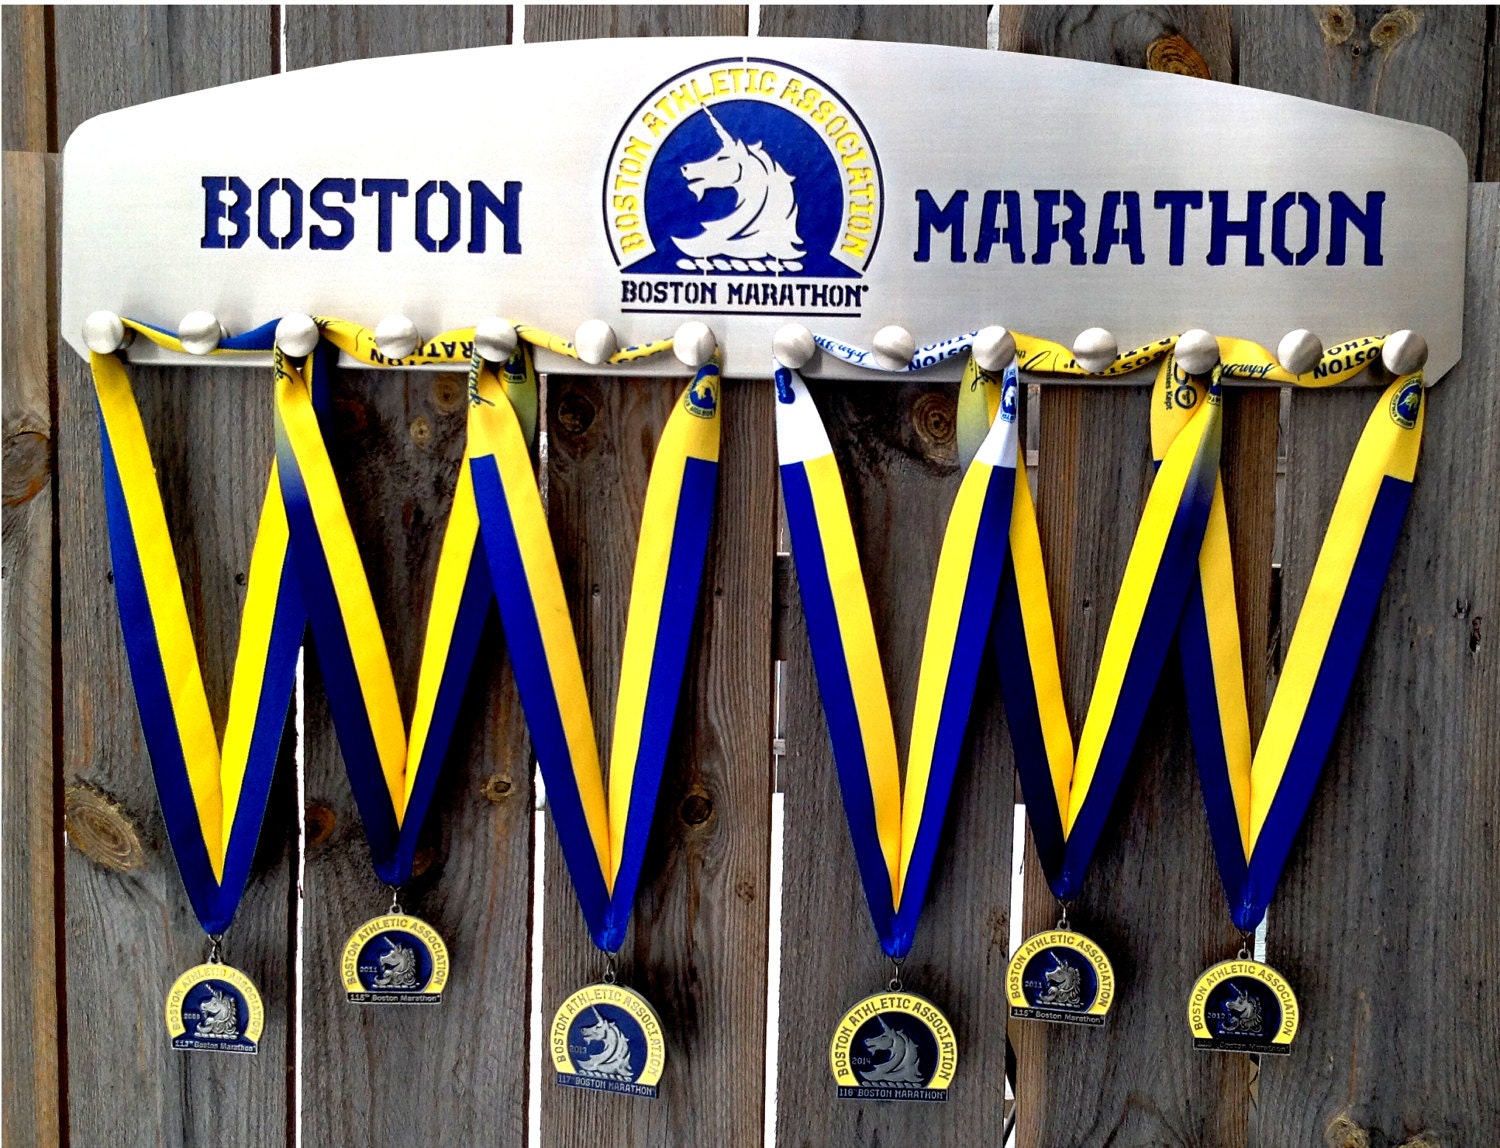 Boston Marathon Official Medal Display by Blue Diamond